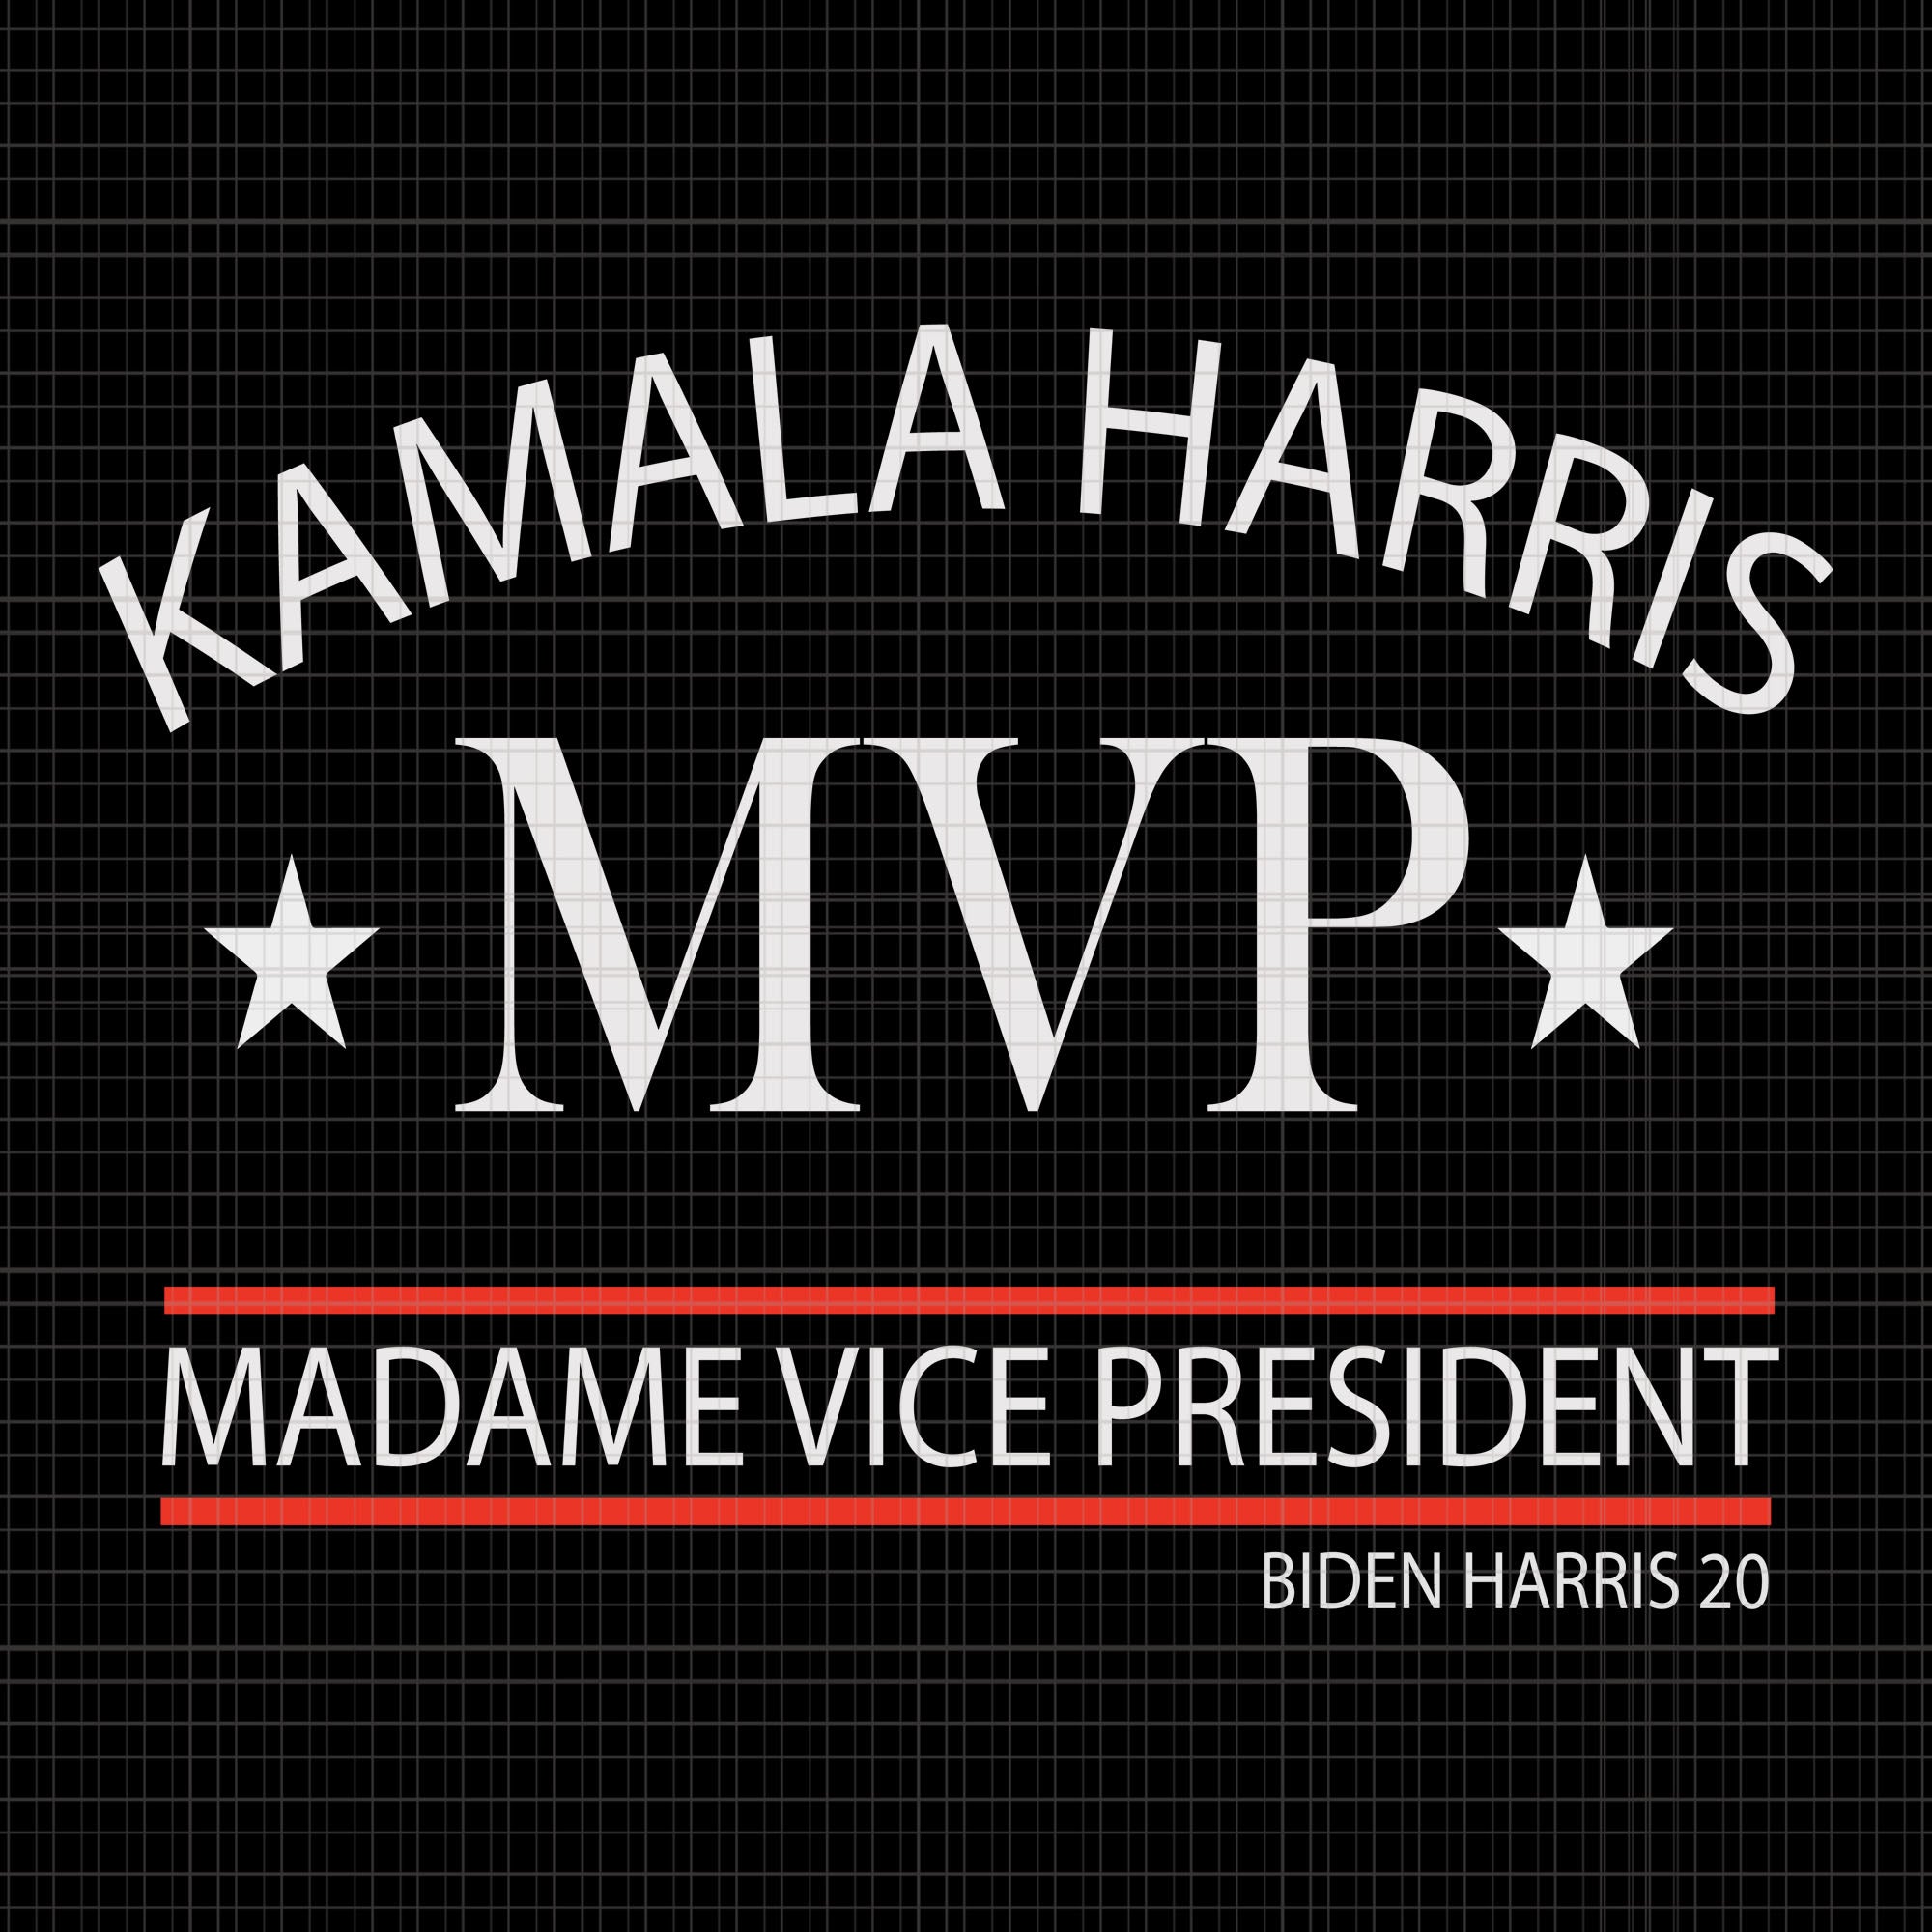 Kamala harris MVP  madam vice president 2020, Biden harris, biden harris 2020 png, biden harris svg, biden 2020, biden 2020 svg, joe biden, joe biden svg,eps, dxf, ai file